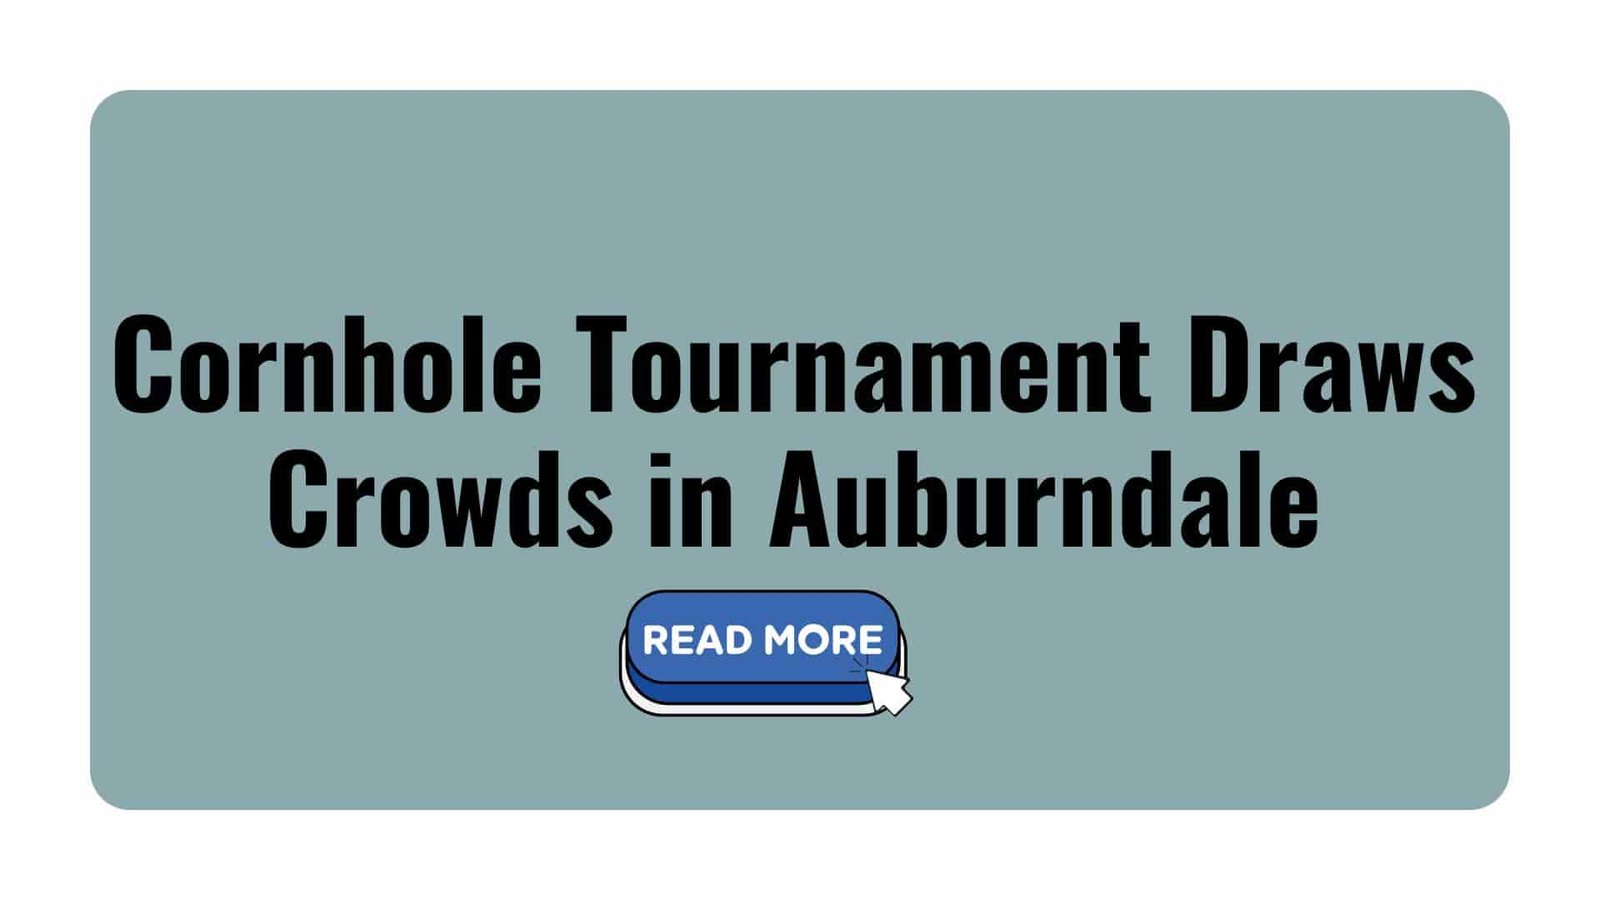 Cornhole Tournament Draws Crowds in AuburndaleCornhole Tournament Draws Crowds in Auburndale